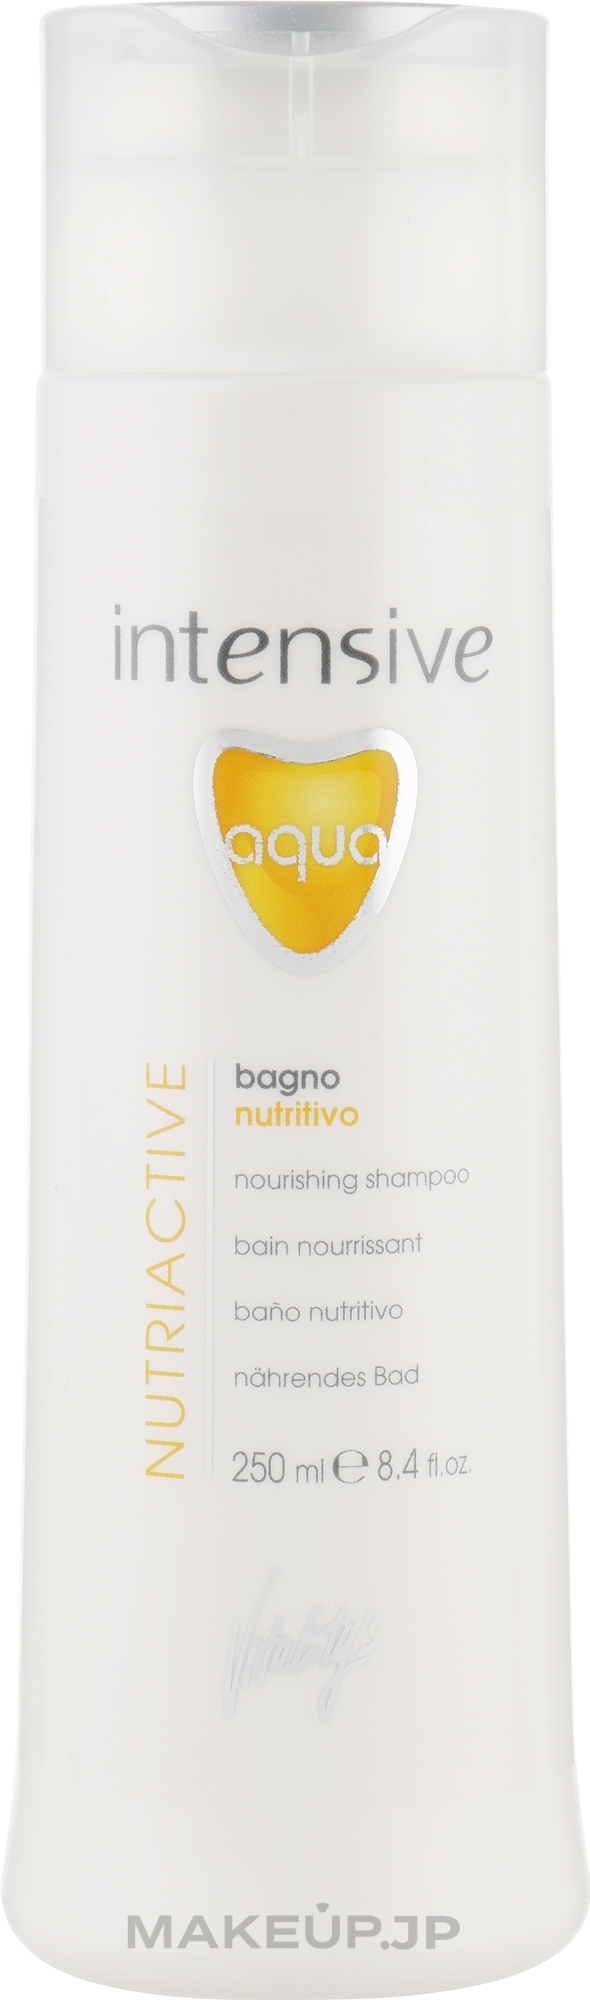 Nourishing Dry Hair Shampoo - Vitality's Intensive Aqua Nourishing Shampoo — photo 250 ml